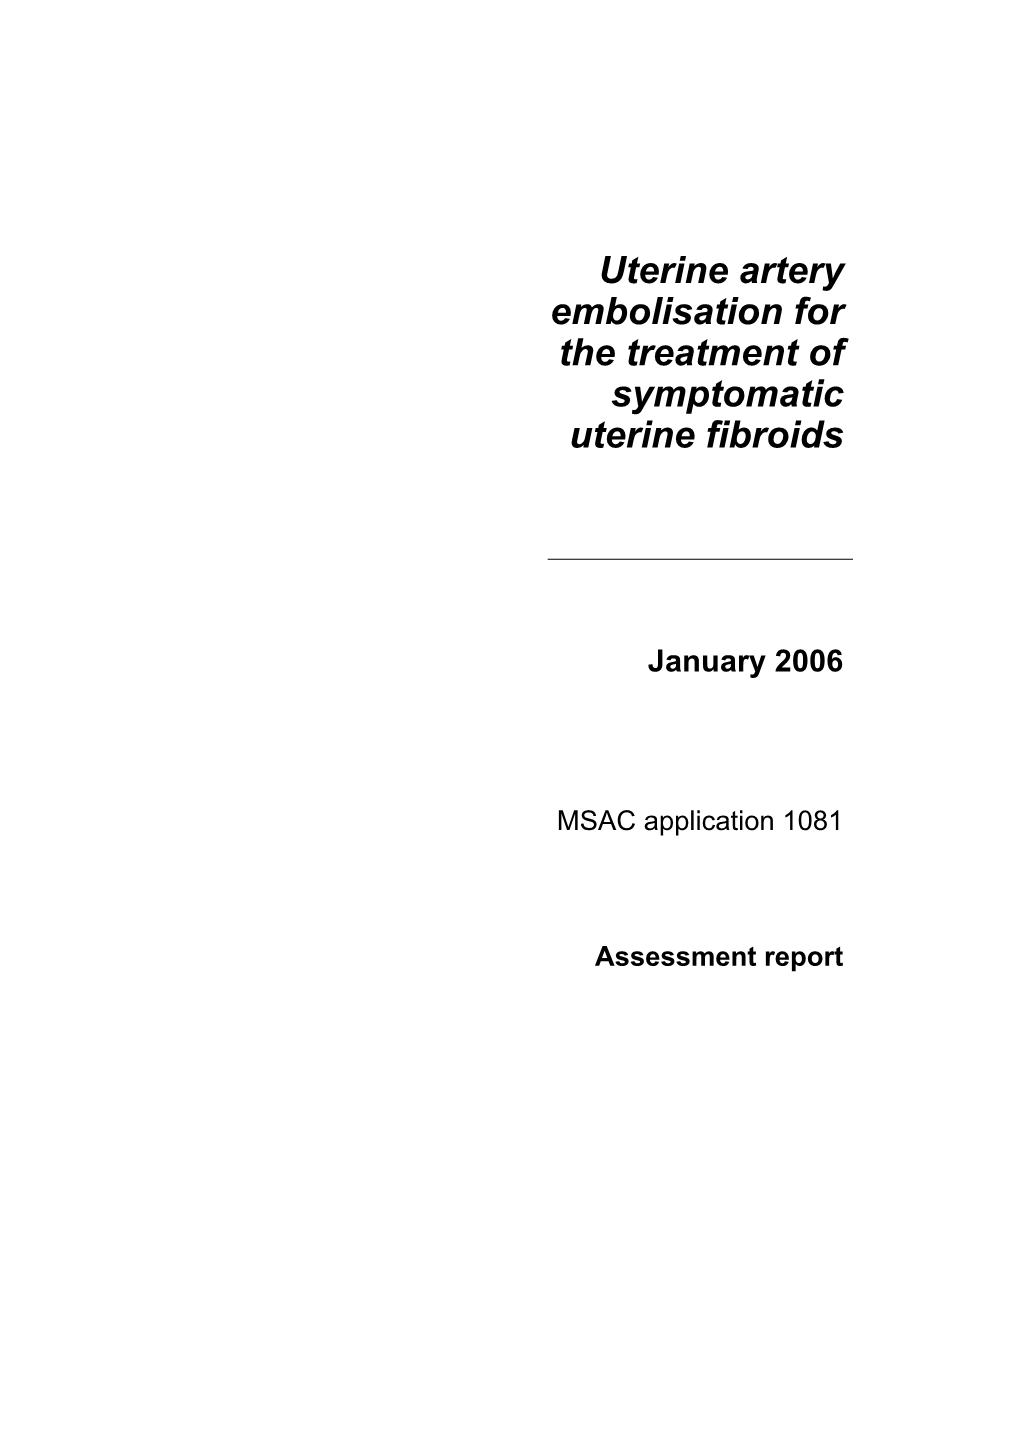 Uterine Artery Embolisation for the Treatment of Symptomatic Uterine Fibroids